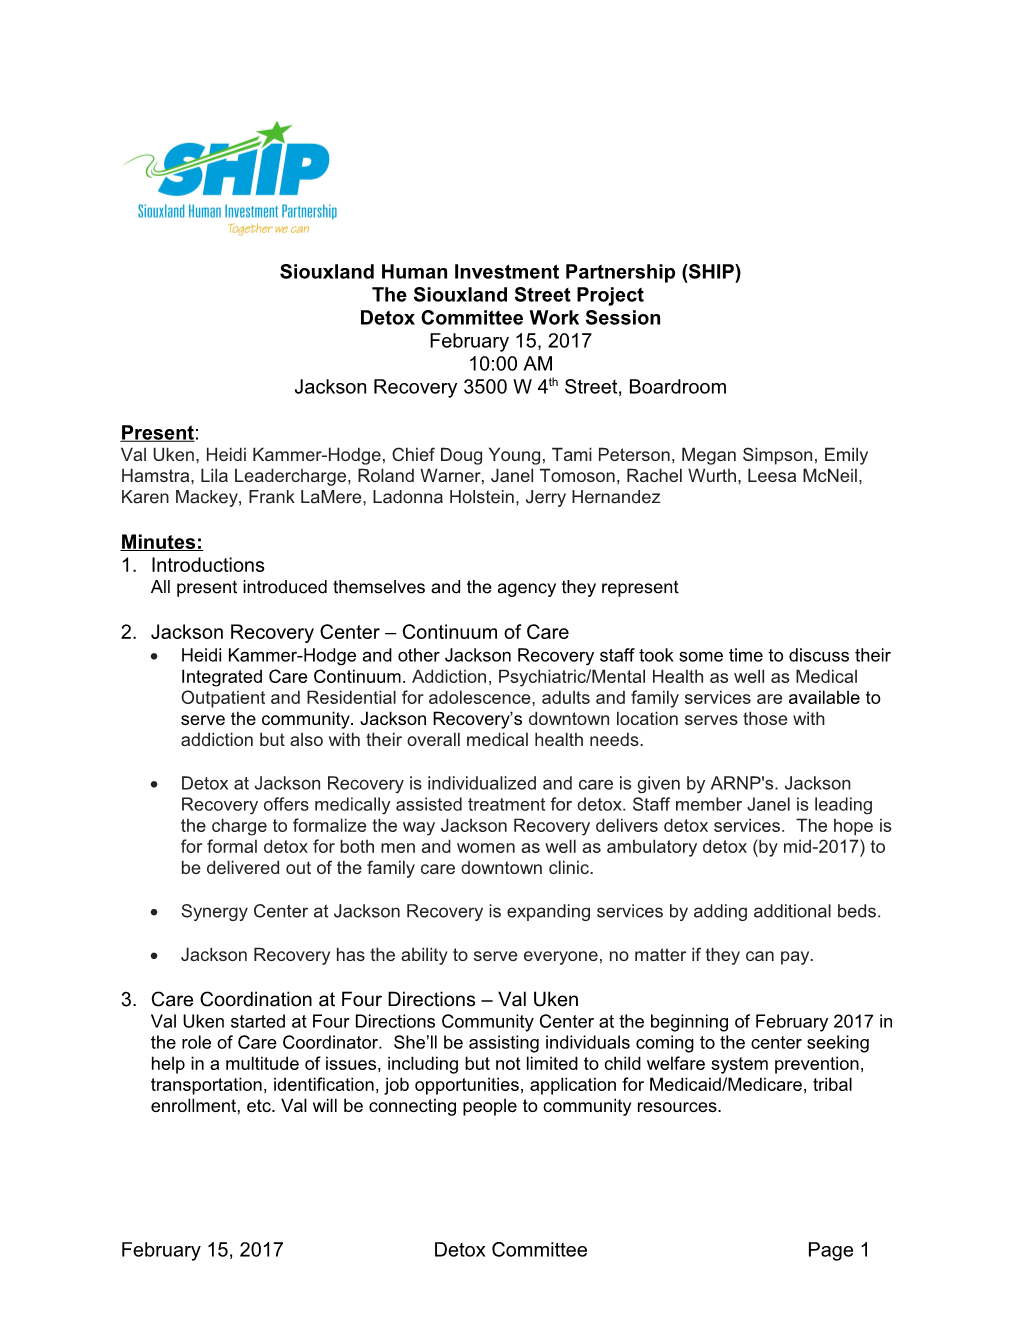 Siouxland Human Investment Partnership (SHIP) s1